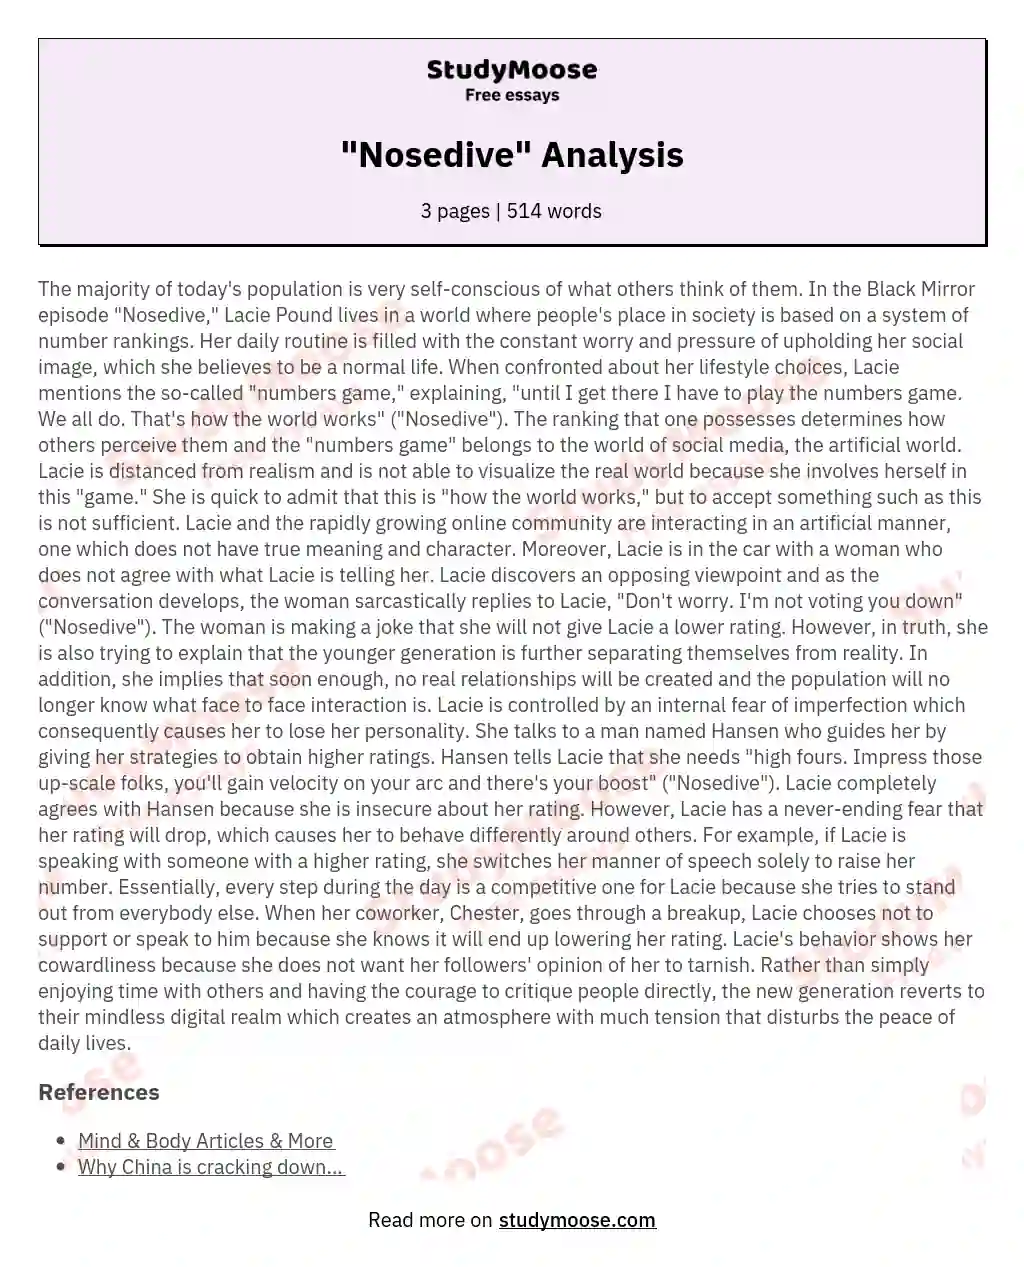 "Nosedive" Analysis essay